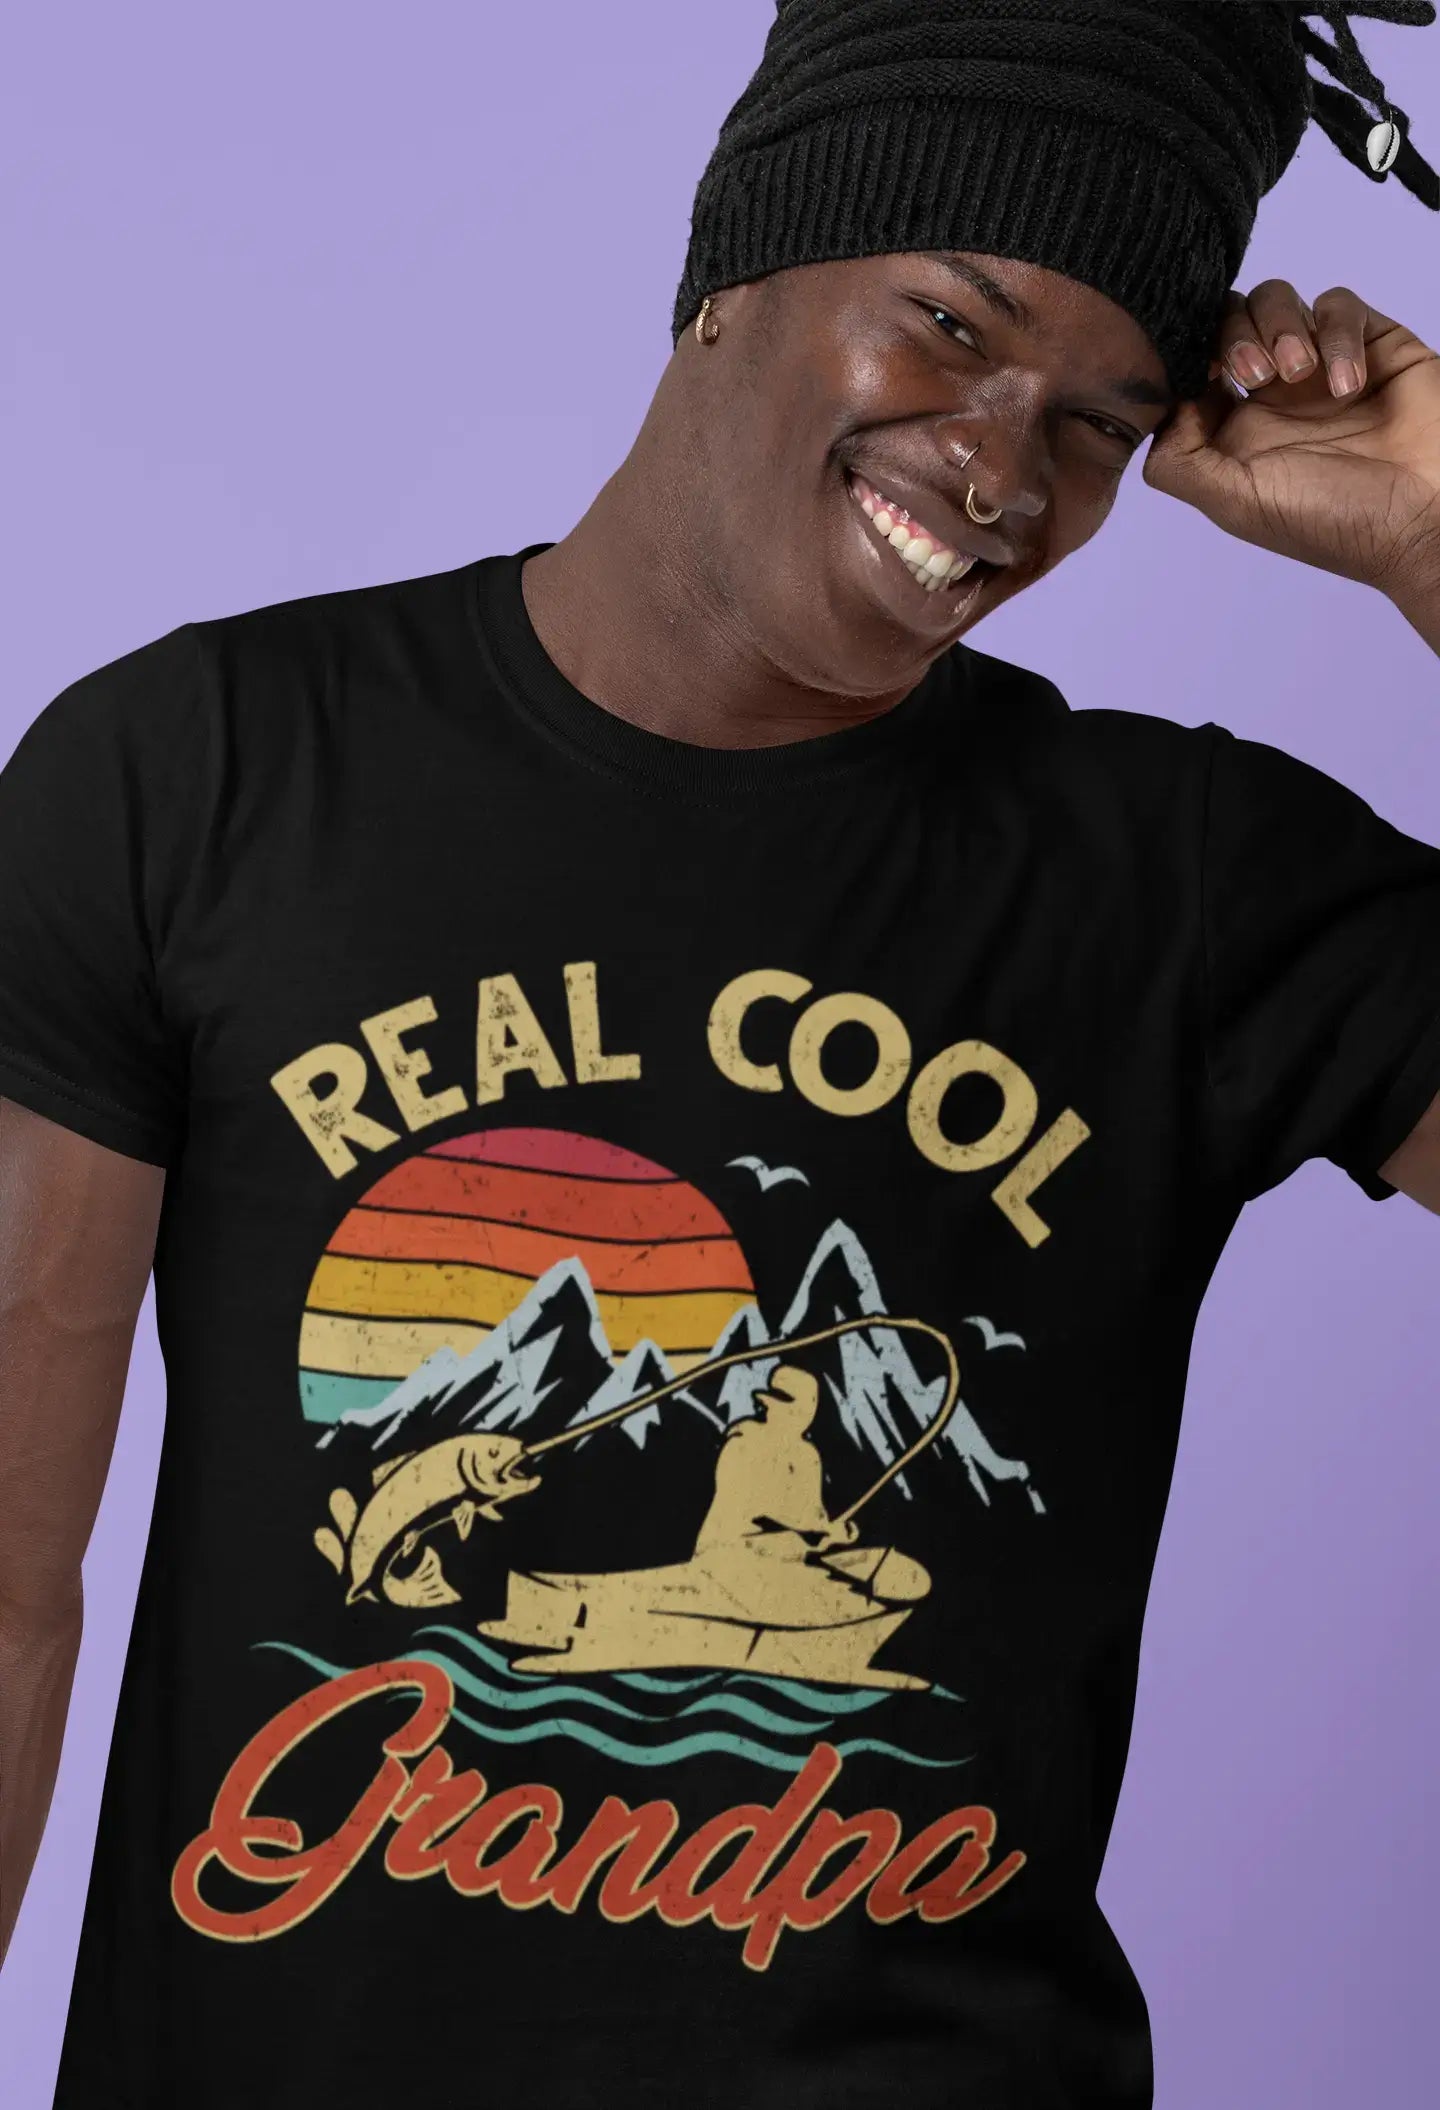 ULTRABASIC Men's Graphic T-Shirt Real Cool Grandpa - Grandpa Sailor - Funny Vintage Shirt